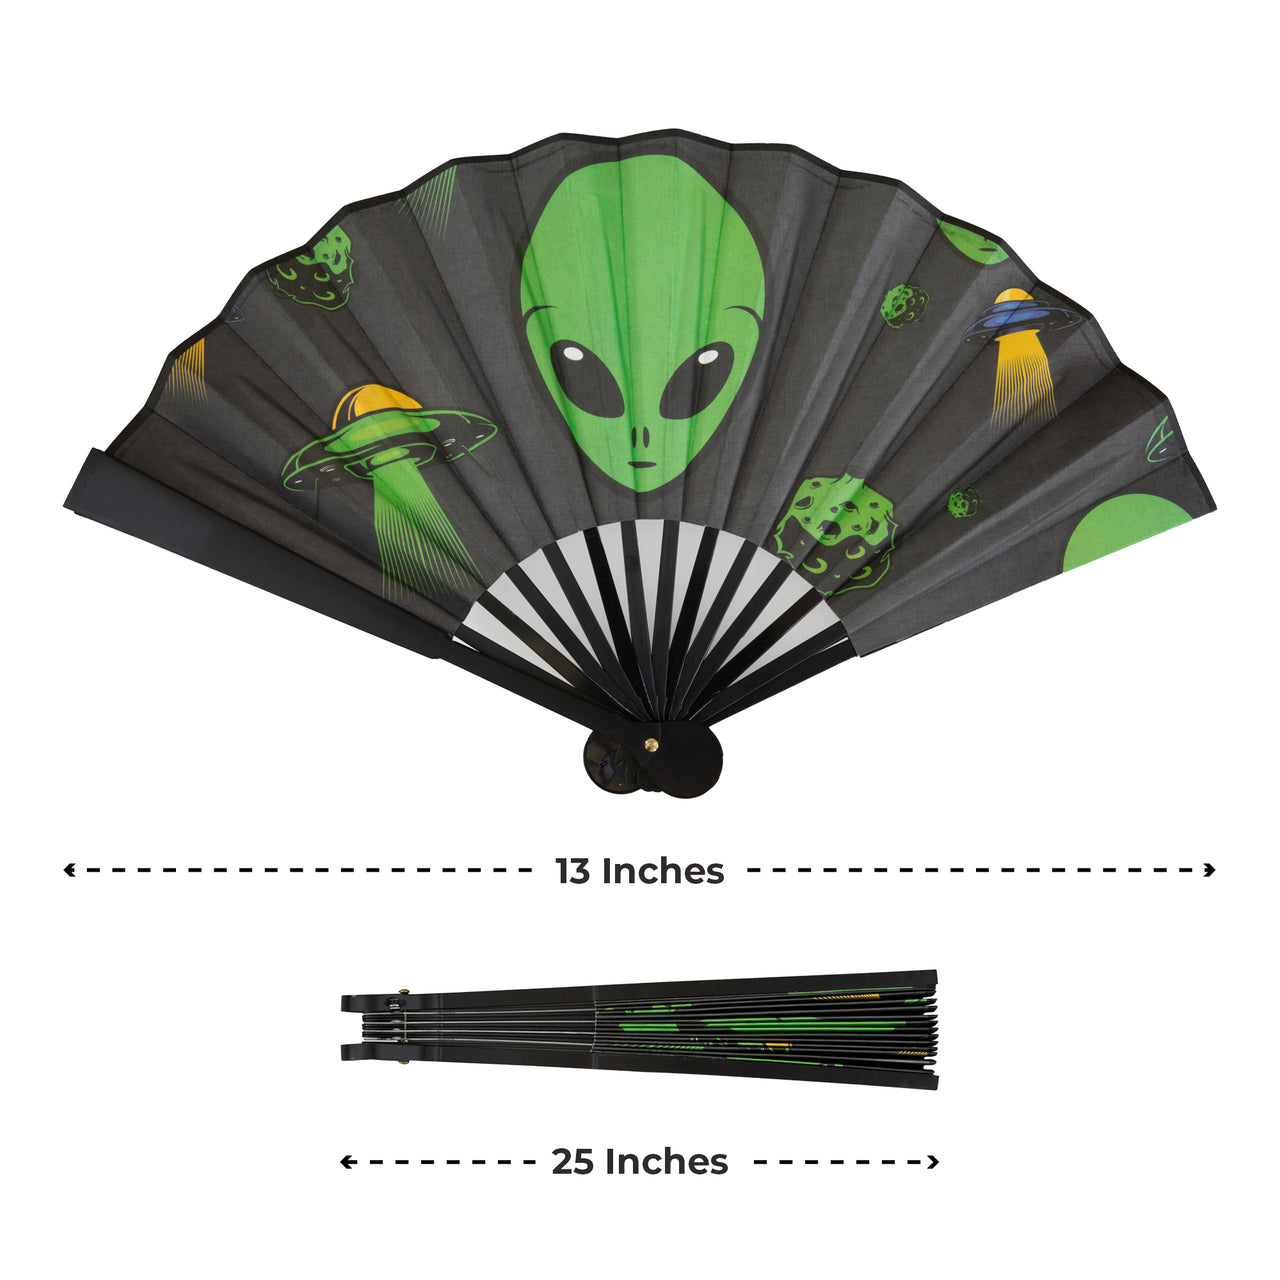 LED Hand Fan - "Alien Invasion" - Foldable & Portable with Alien Design